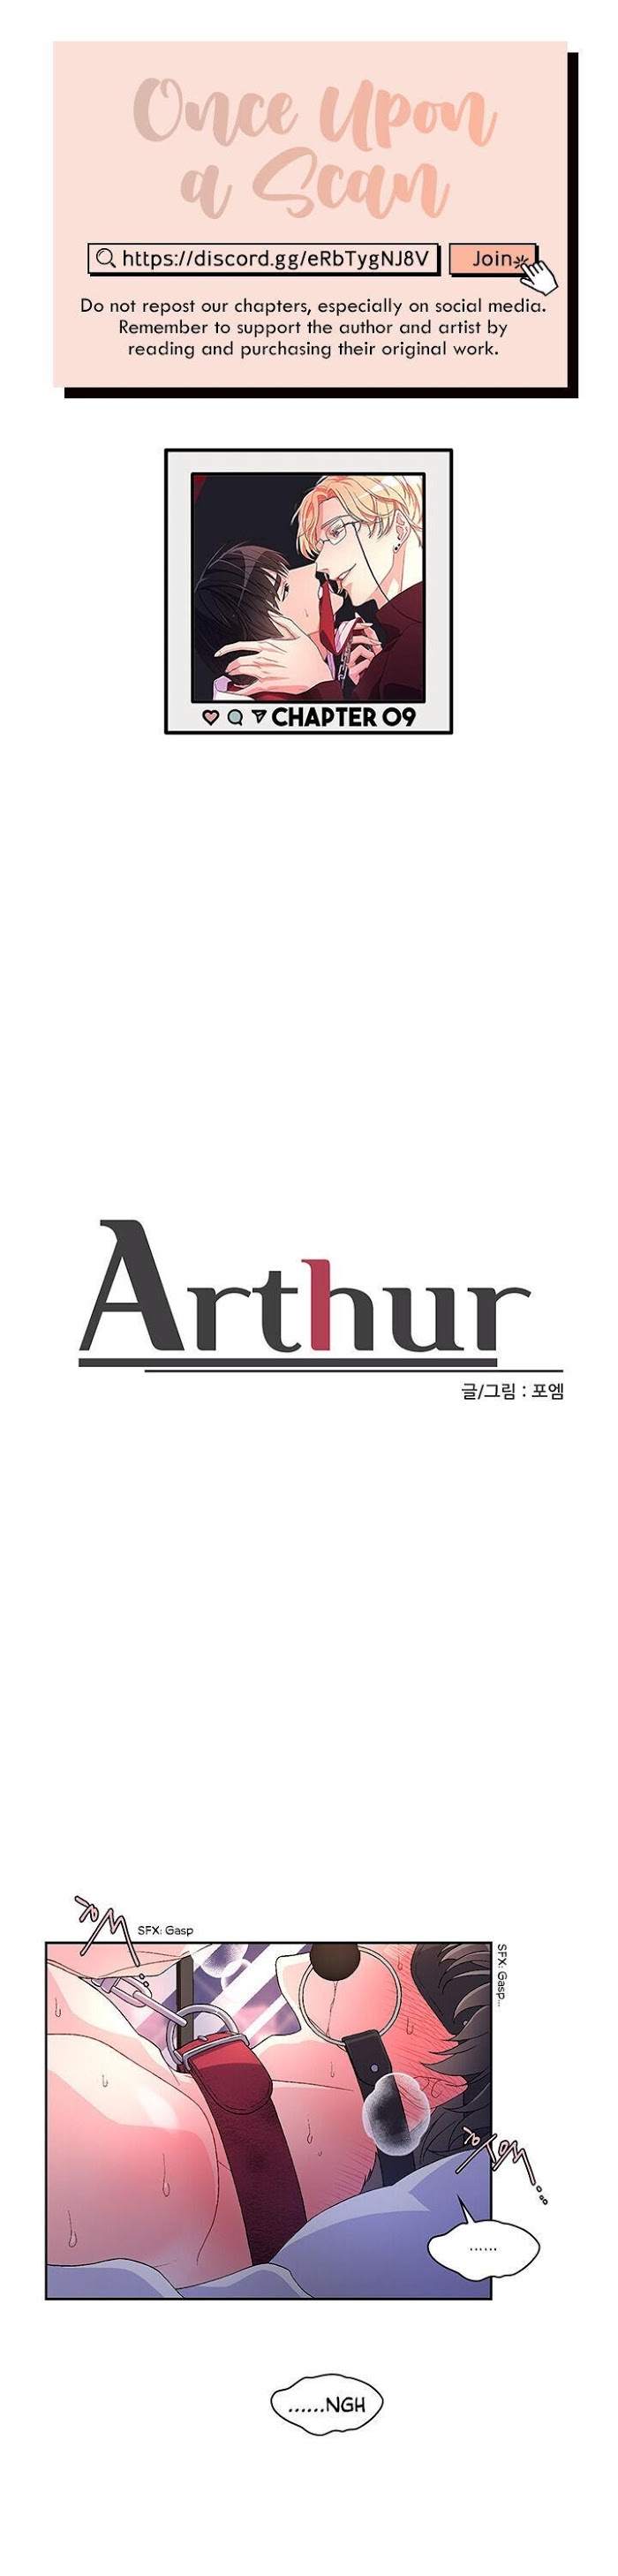 Arthur Chapter 09 - Picture 1